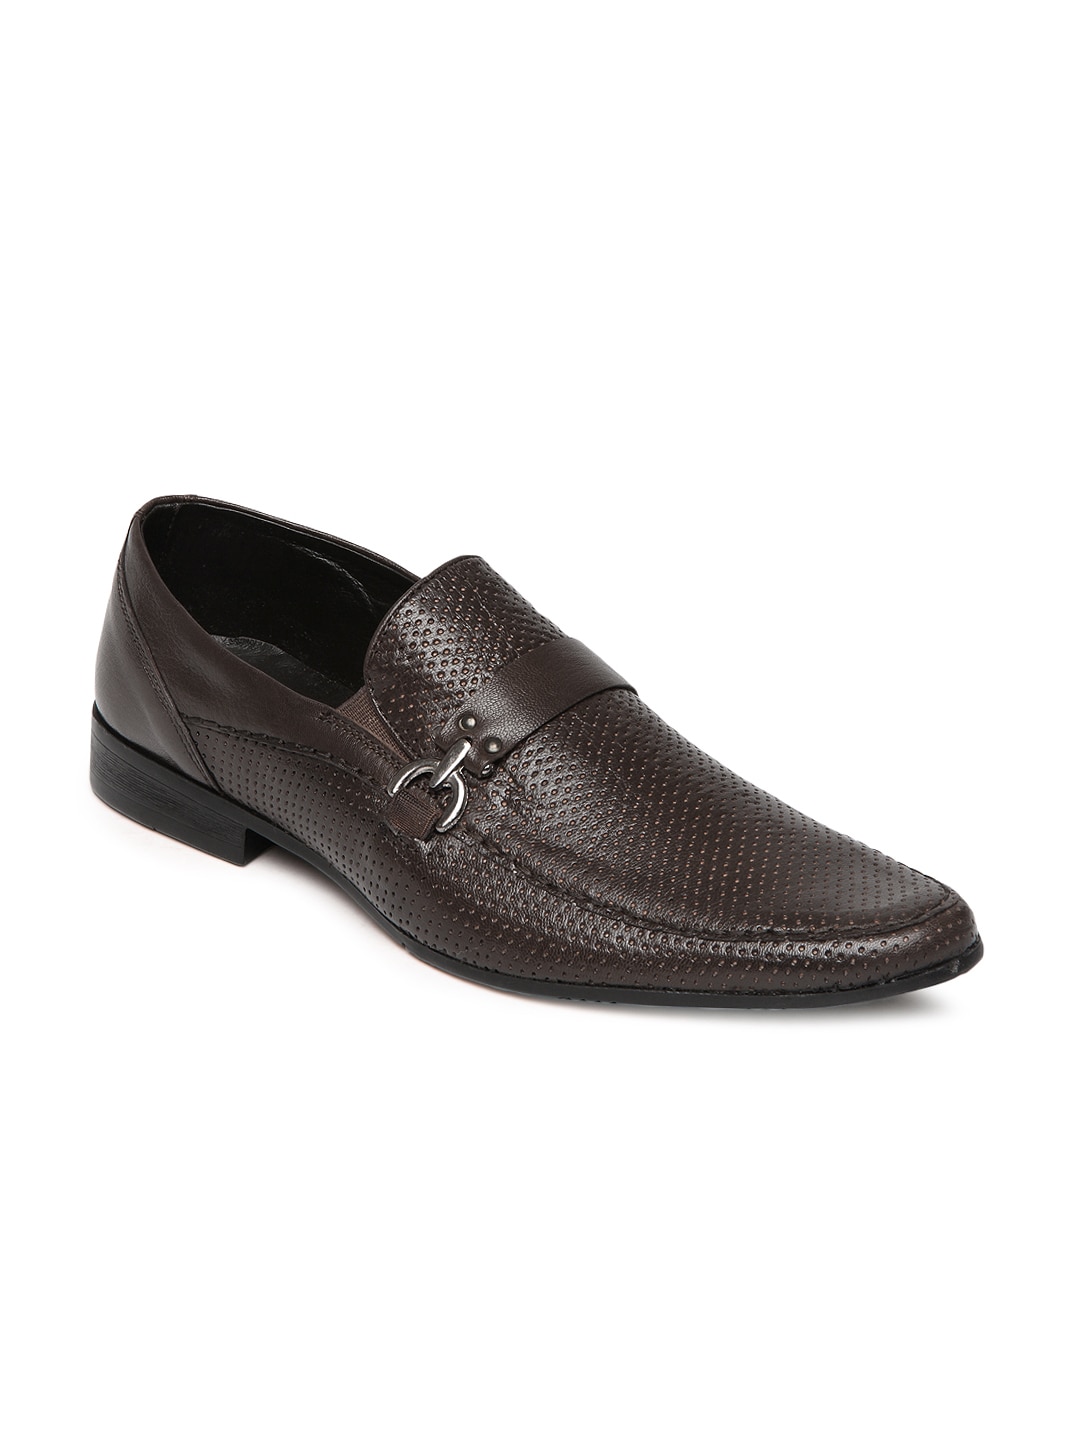 Franco Leone Men Brown Leather Formal Shoes